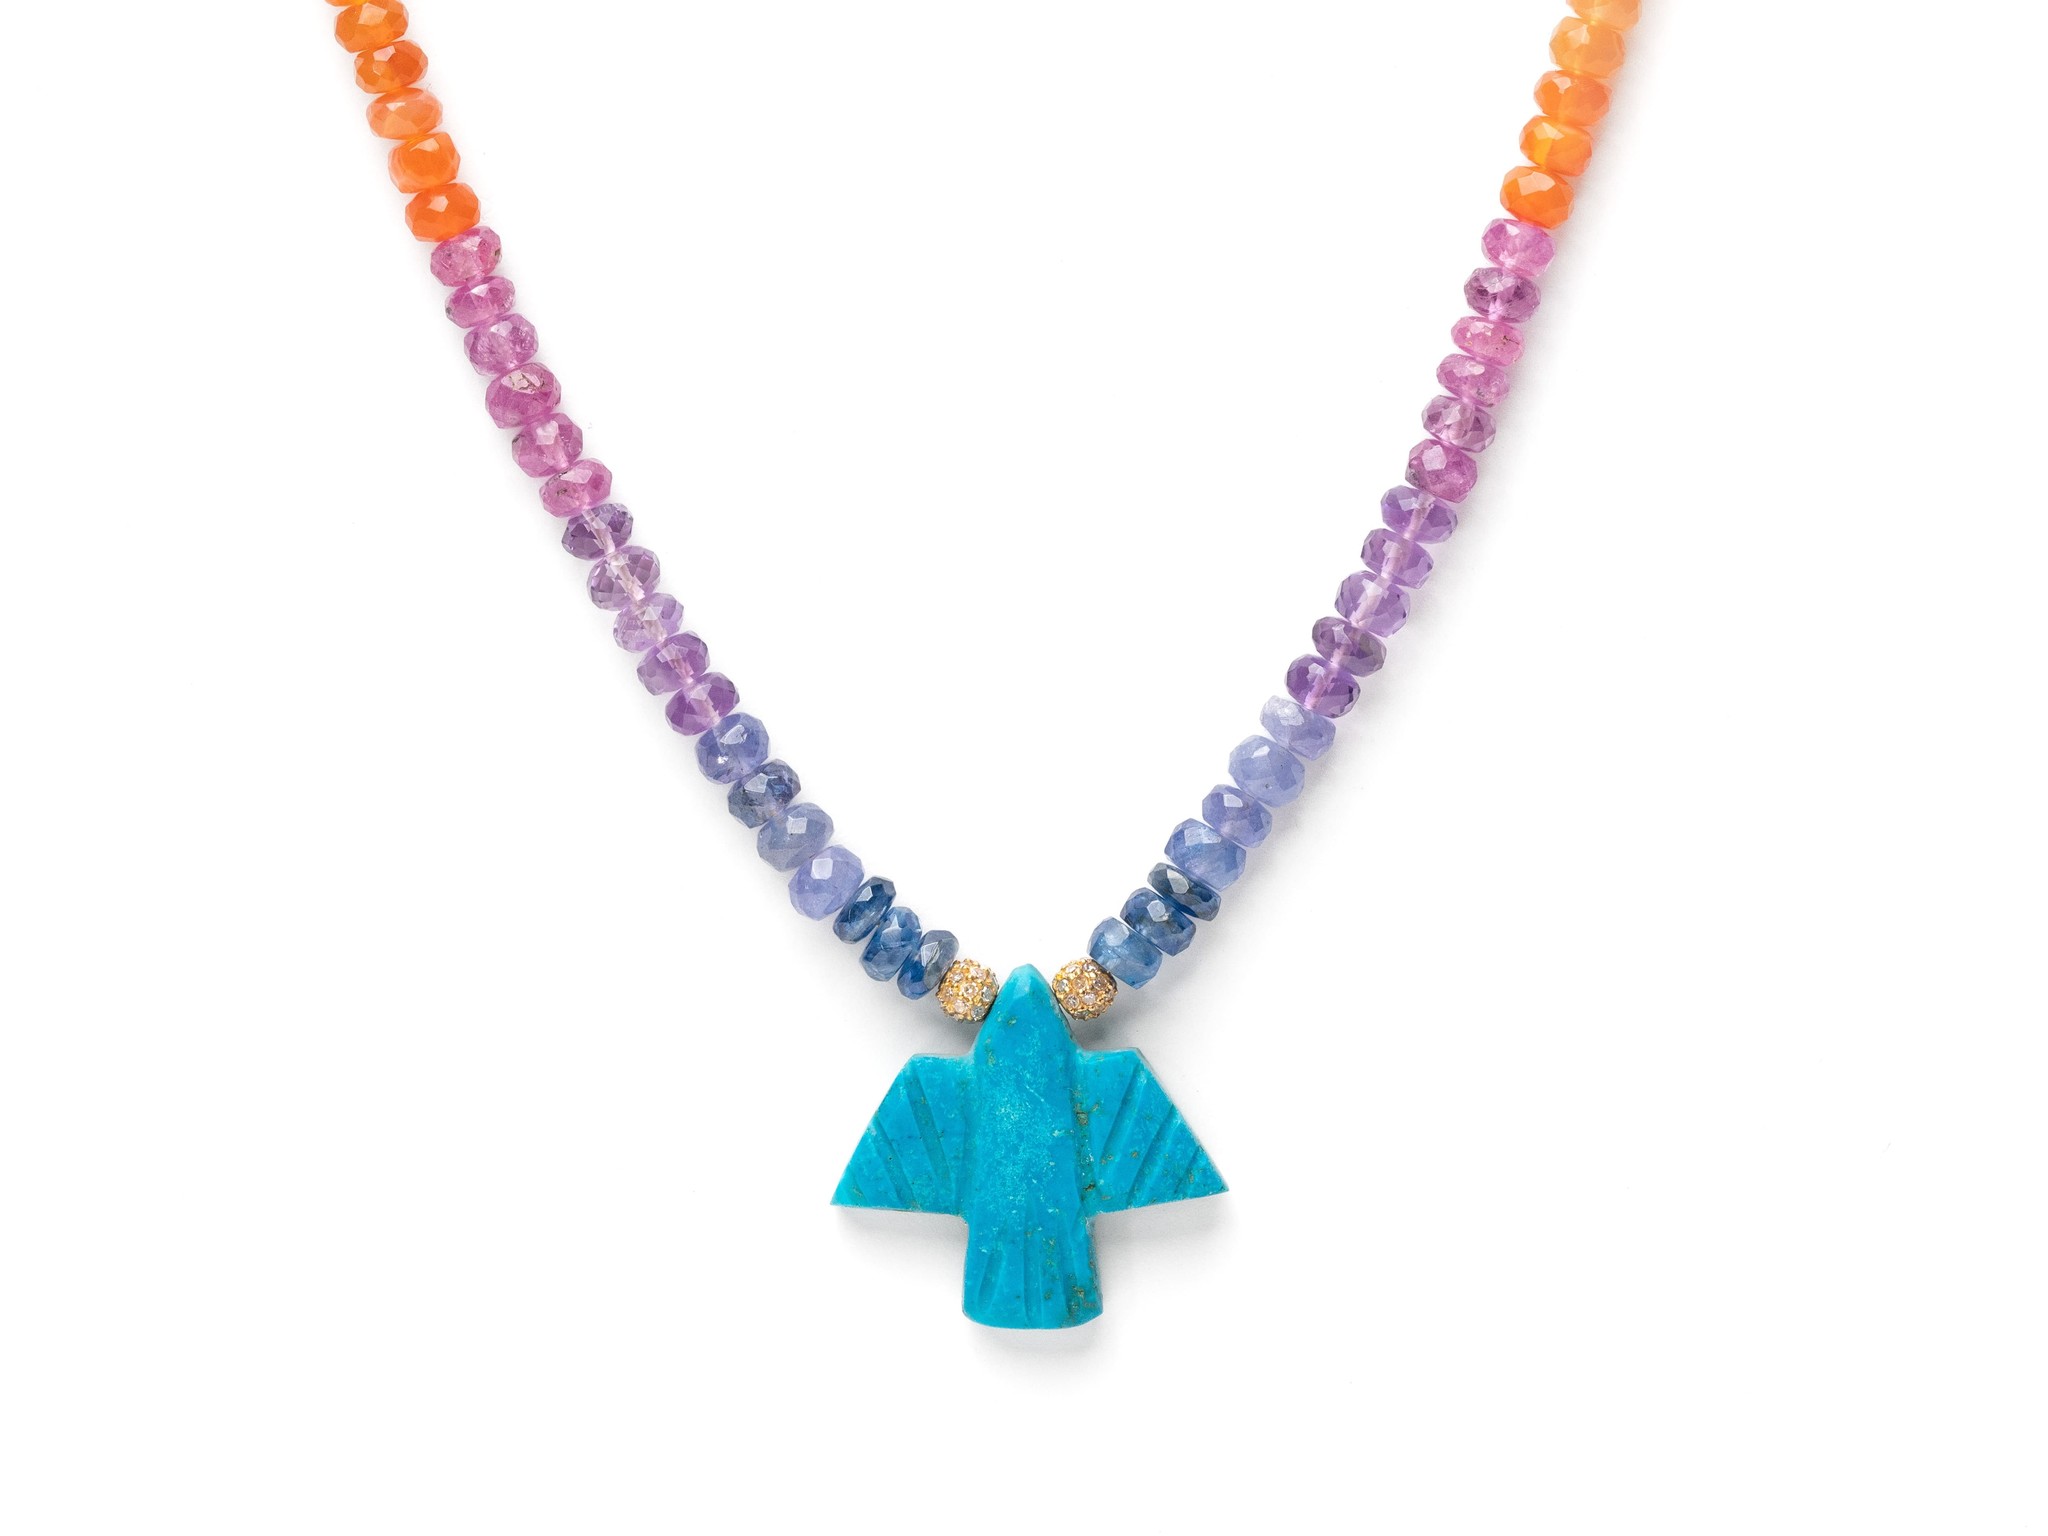 Rainbow Beads Choker Necklace / Bright - Hello My Love